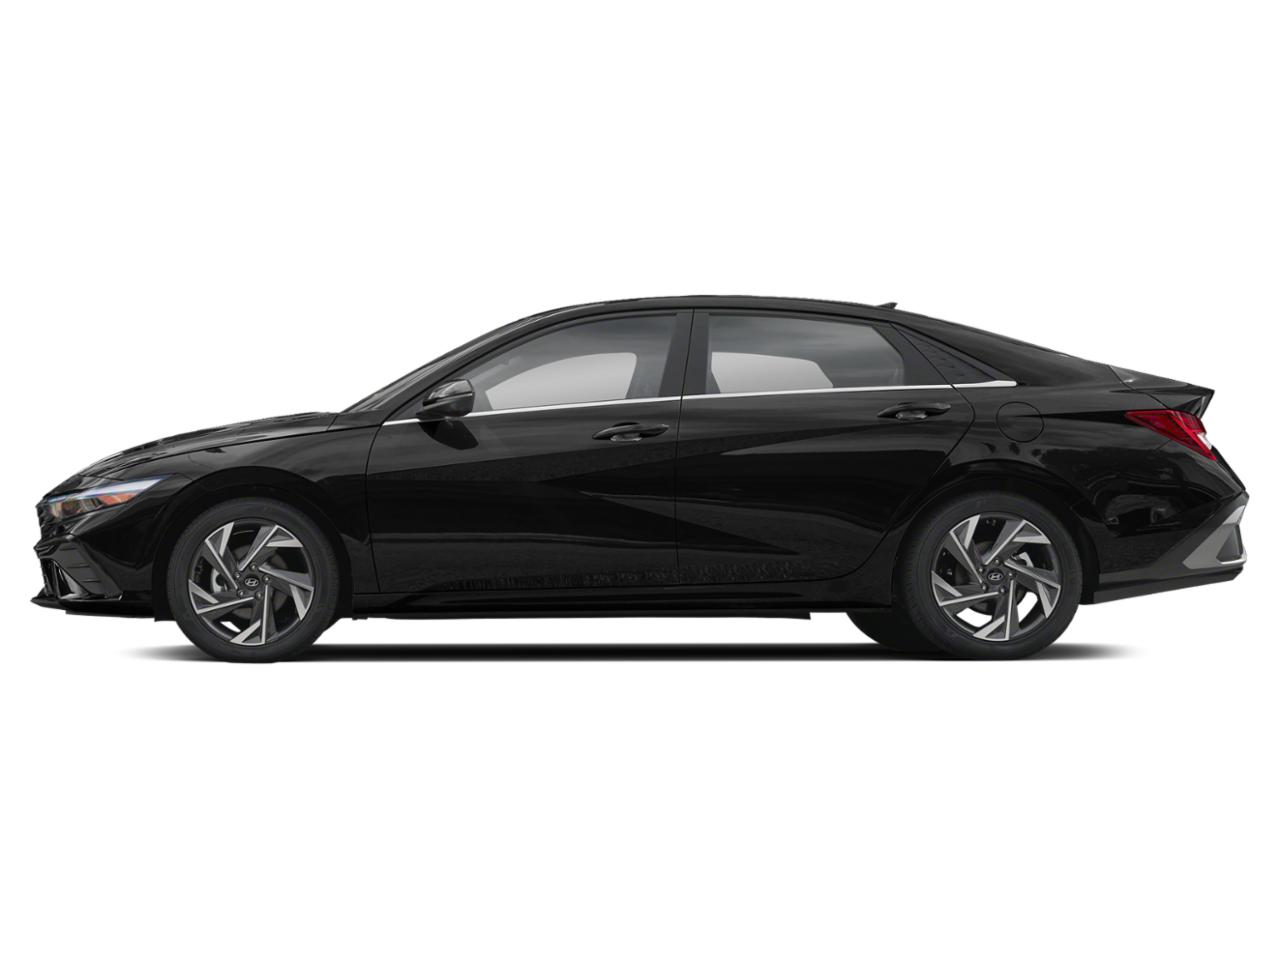 2024 Hyundai ELANTRA Limited IVT Black Limited IVT. A Hyundai ELANTRA